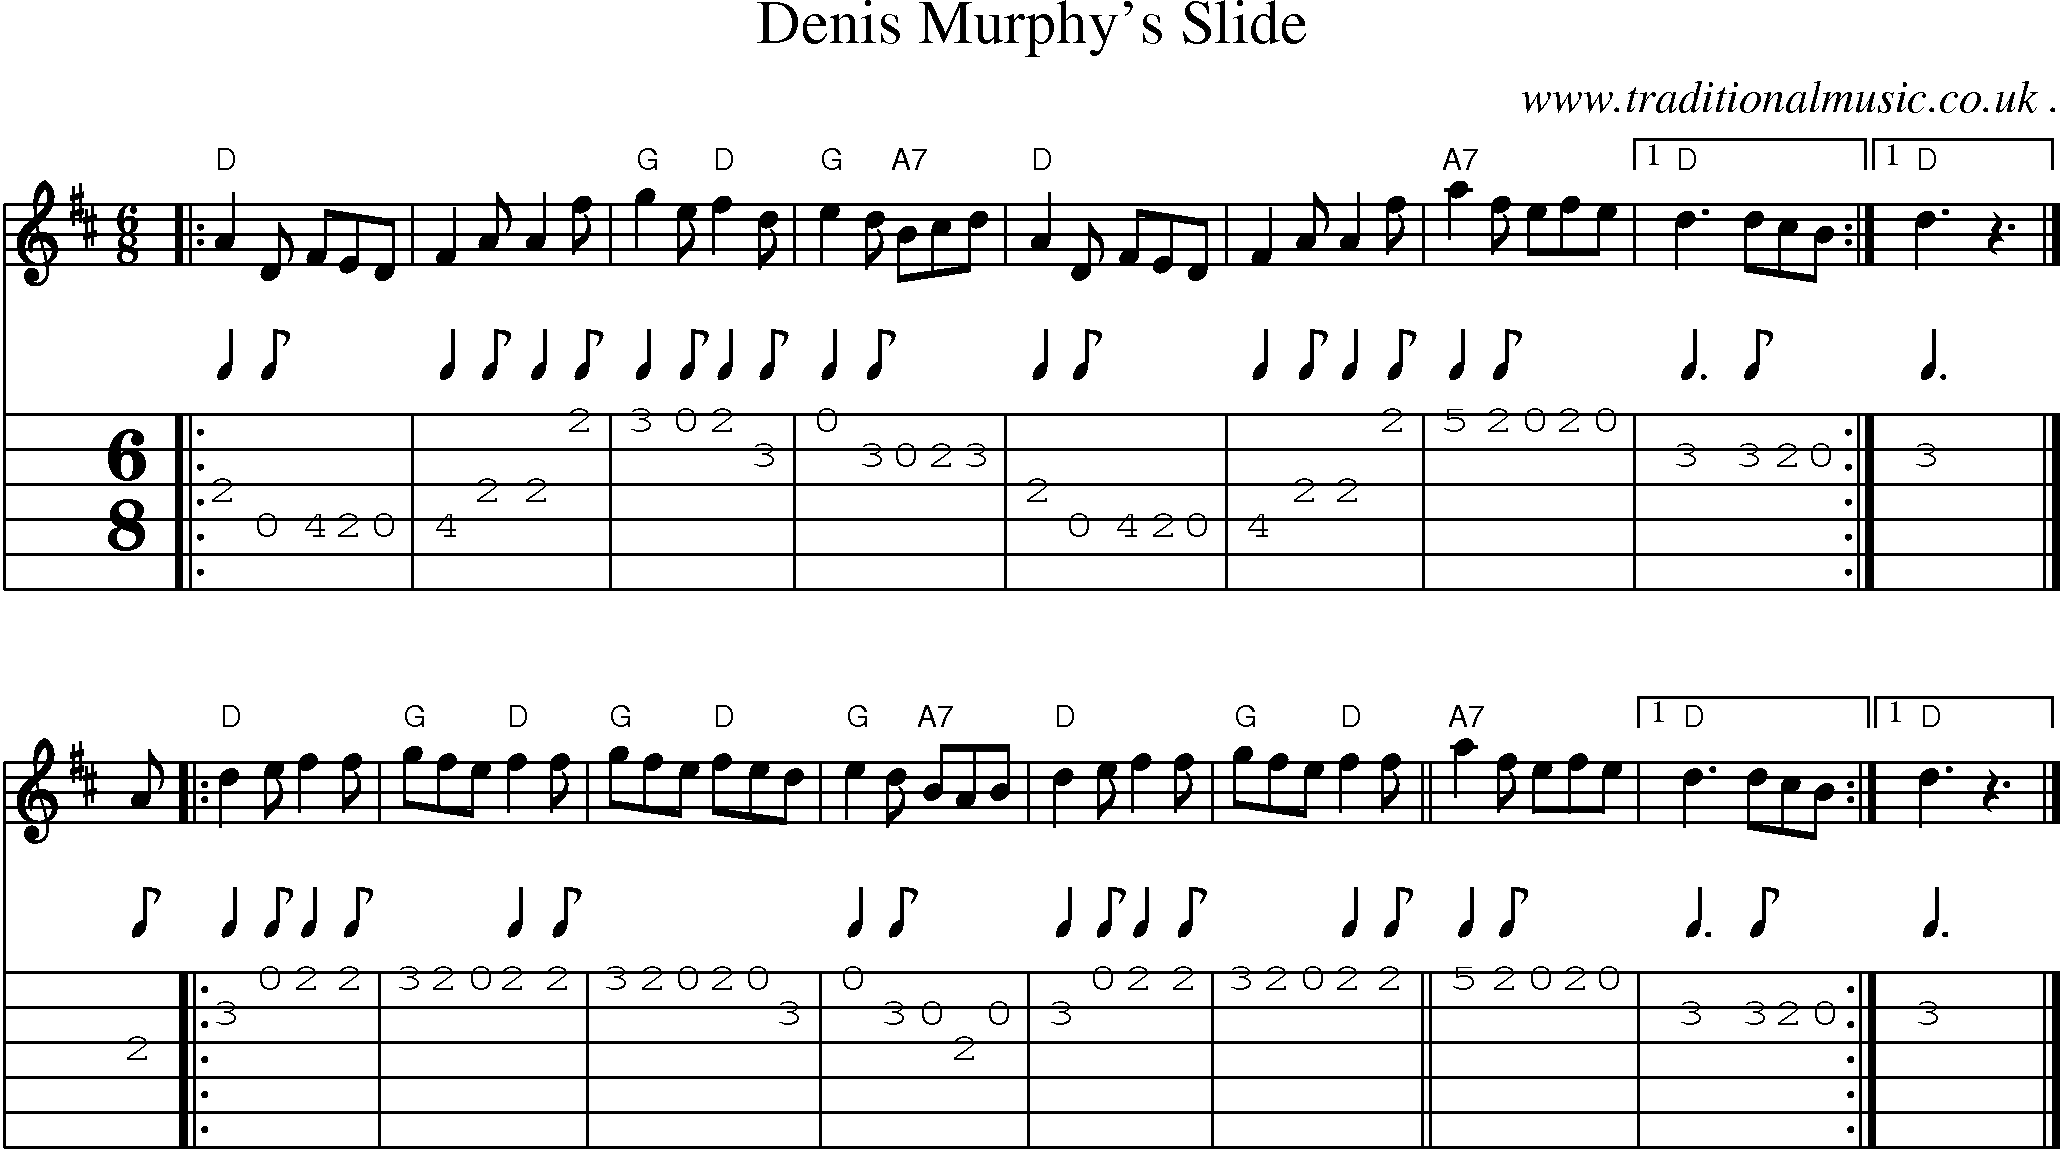 Sheet-music  score, Chords and Guitar Tabs for Denis Murphys Slide